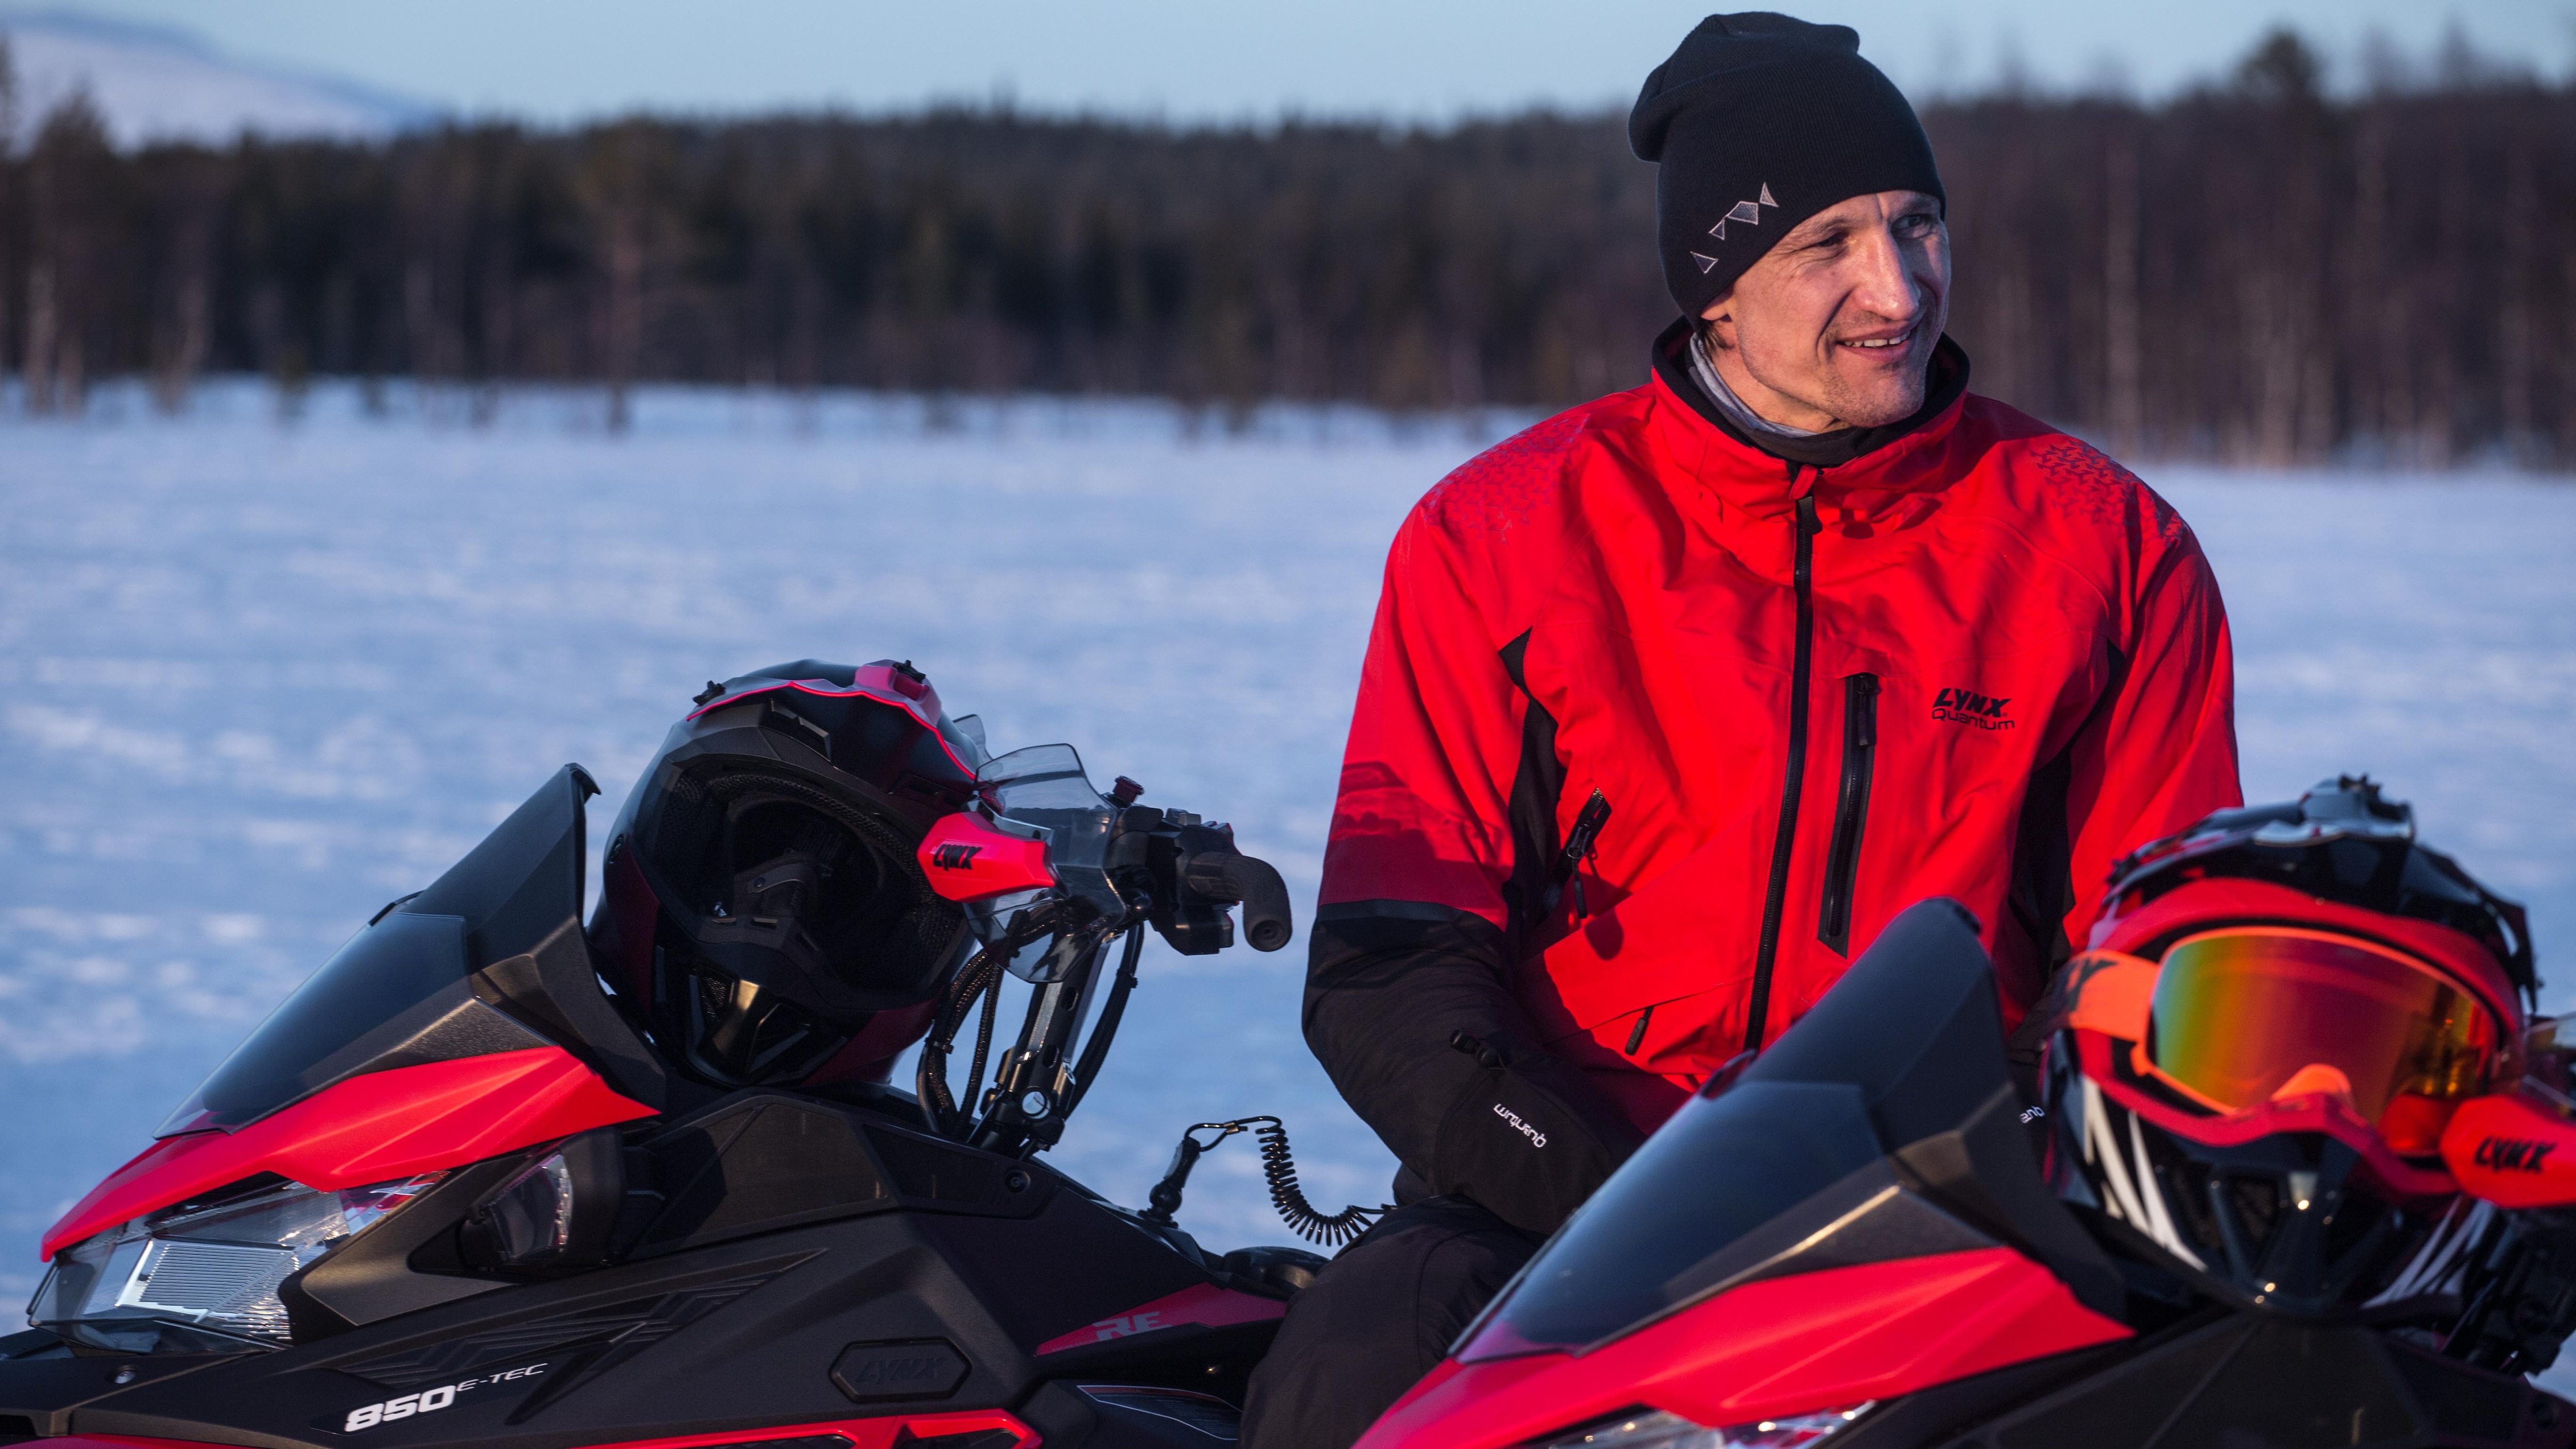 Football player Sami Hyypiä chatting on Lynx snowmobile